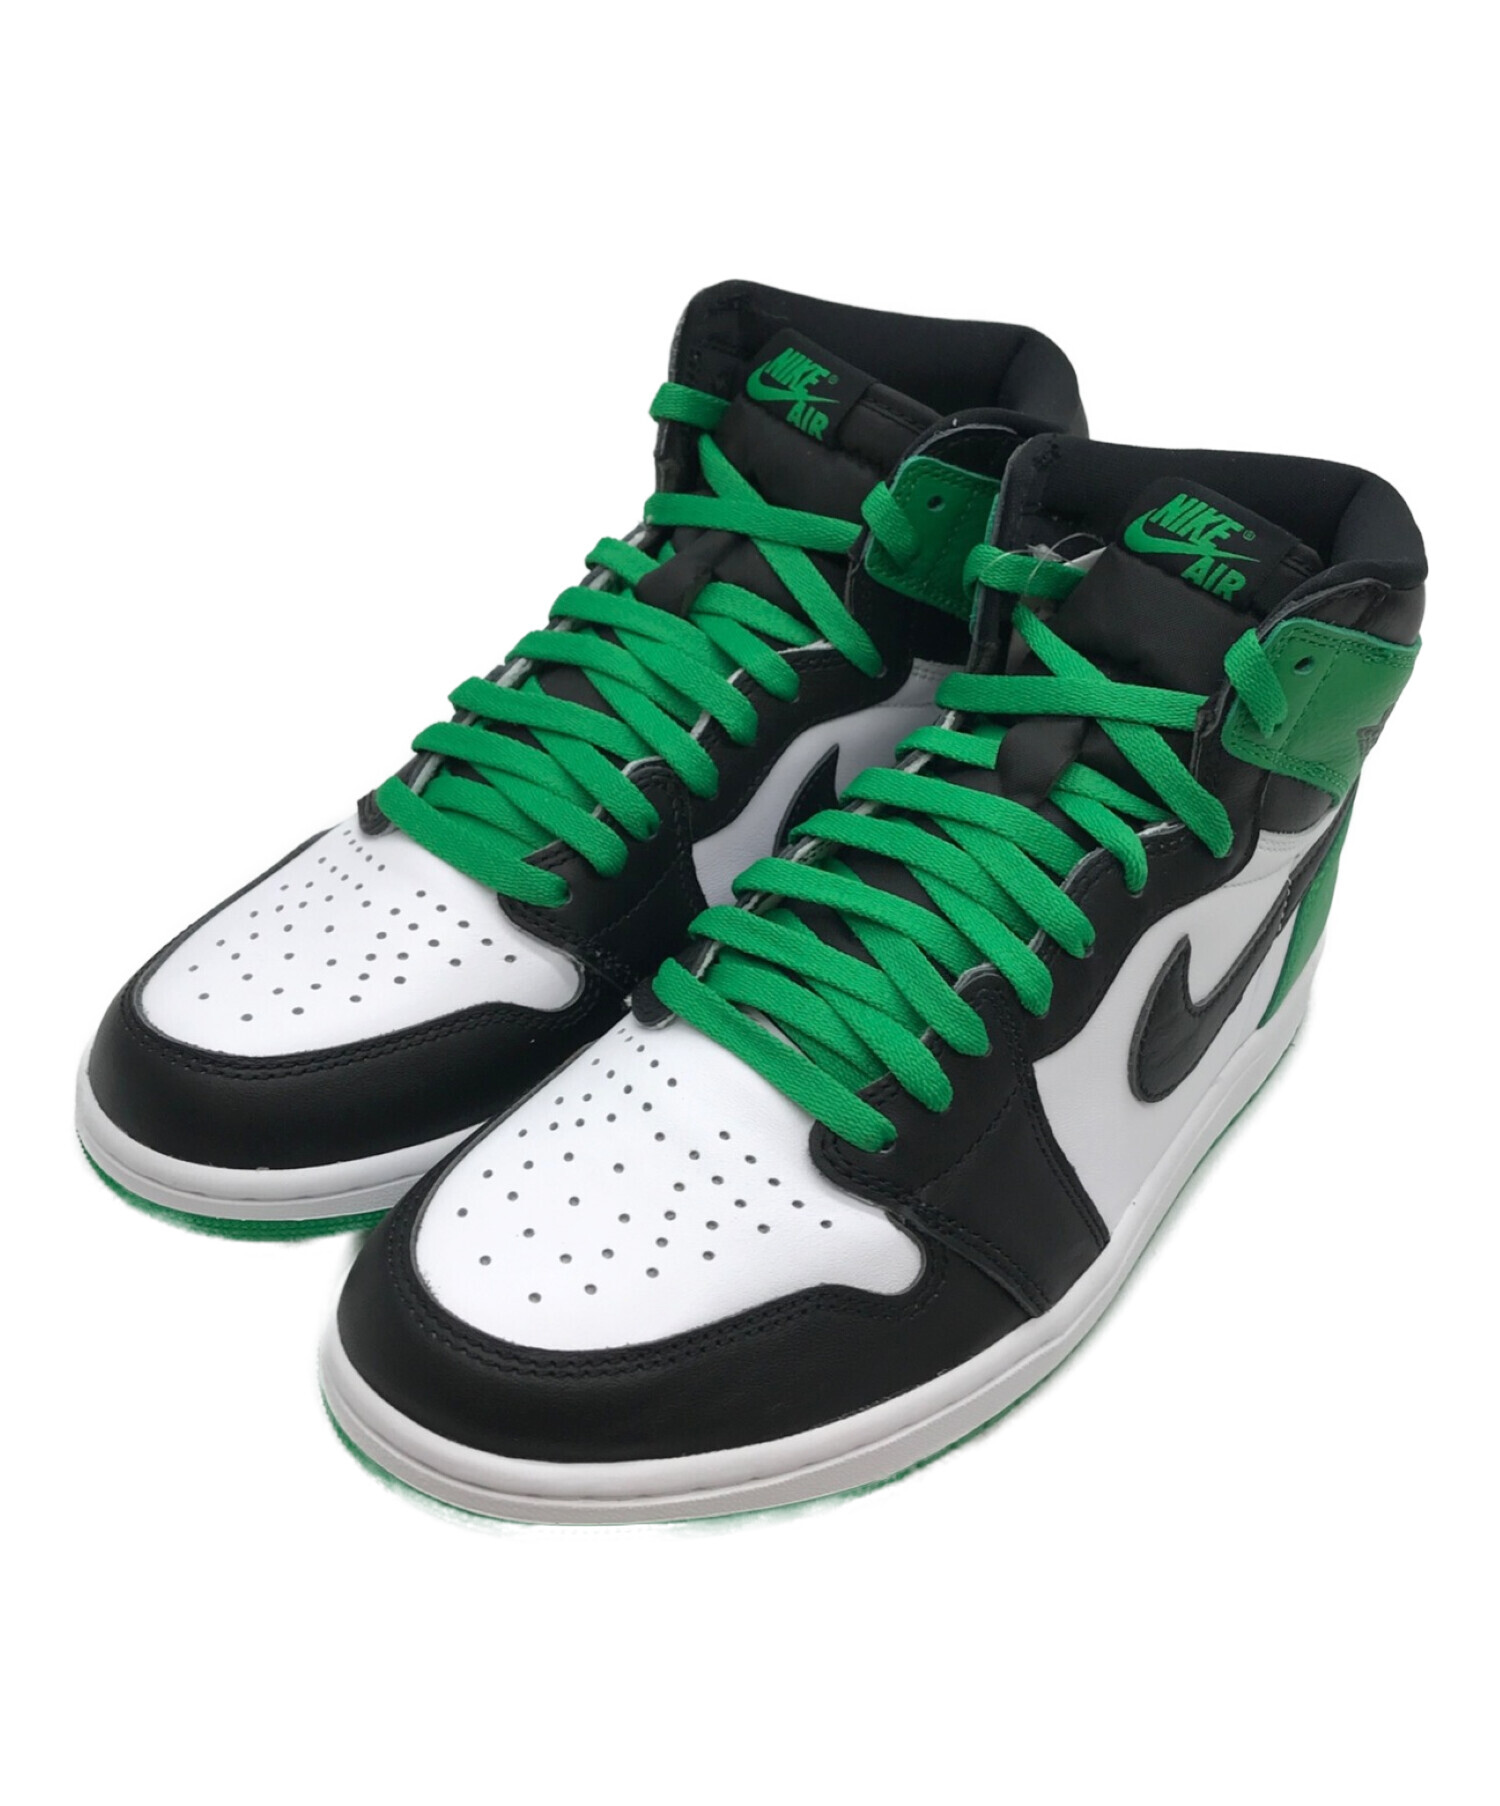 Air Jordan 1 Retro High OG Celtics Green